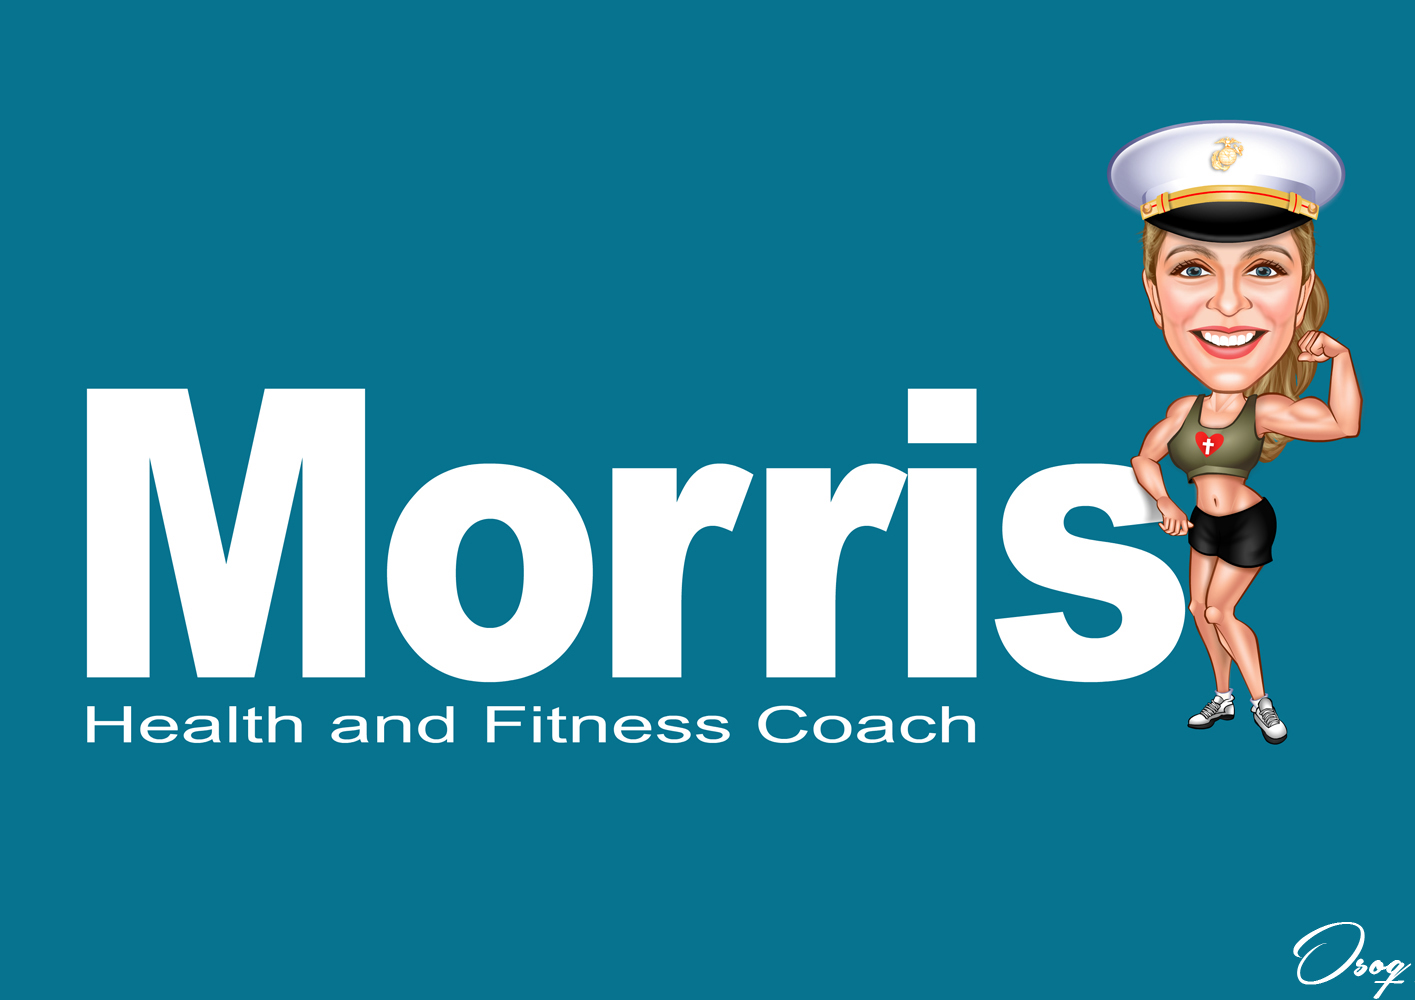 Fitness Logo Example